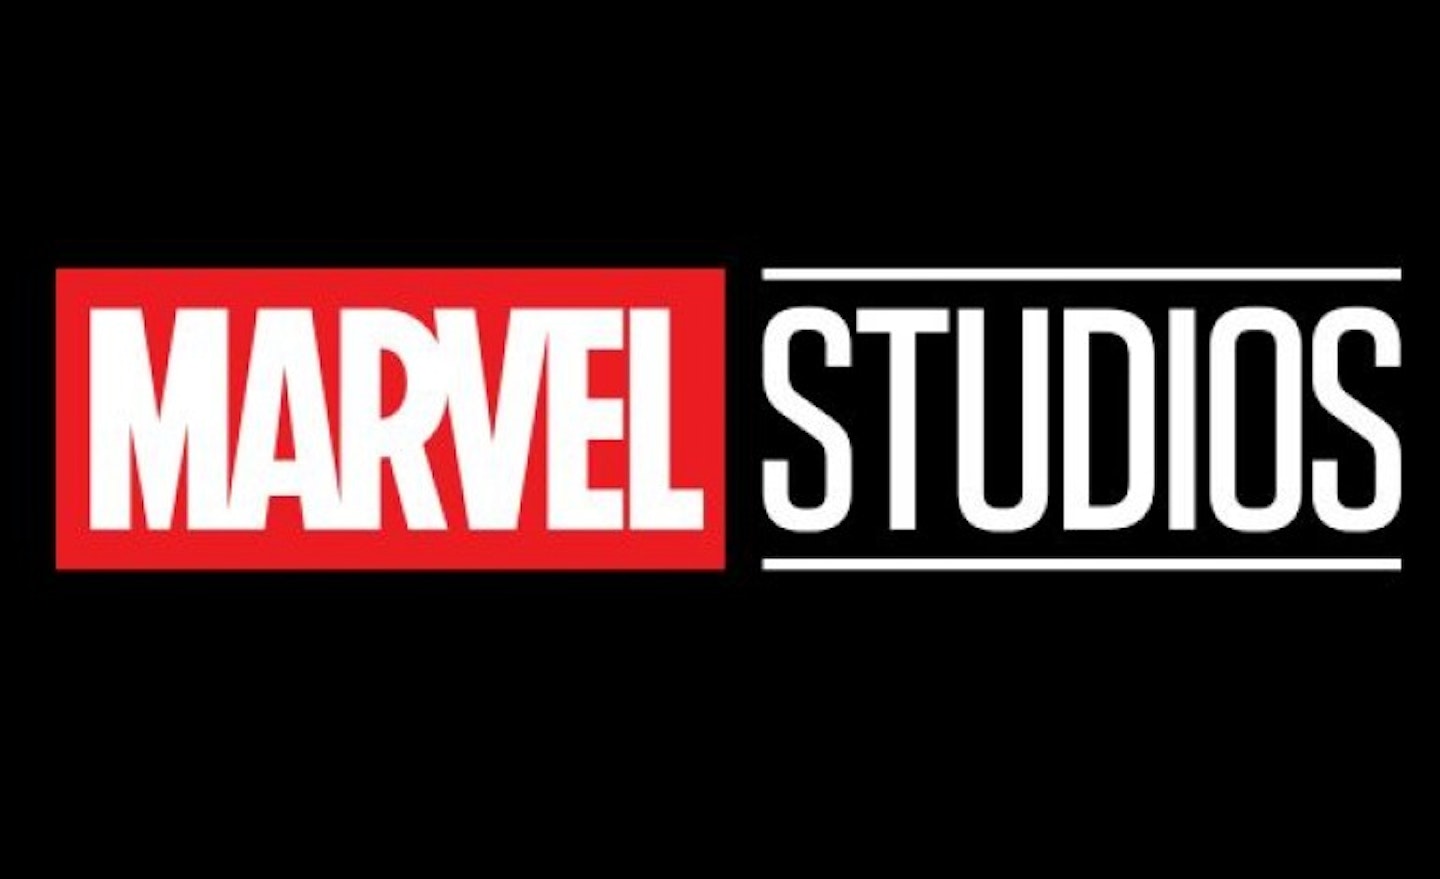 New Marvel Studios logo